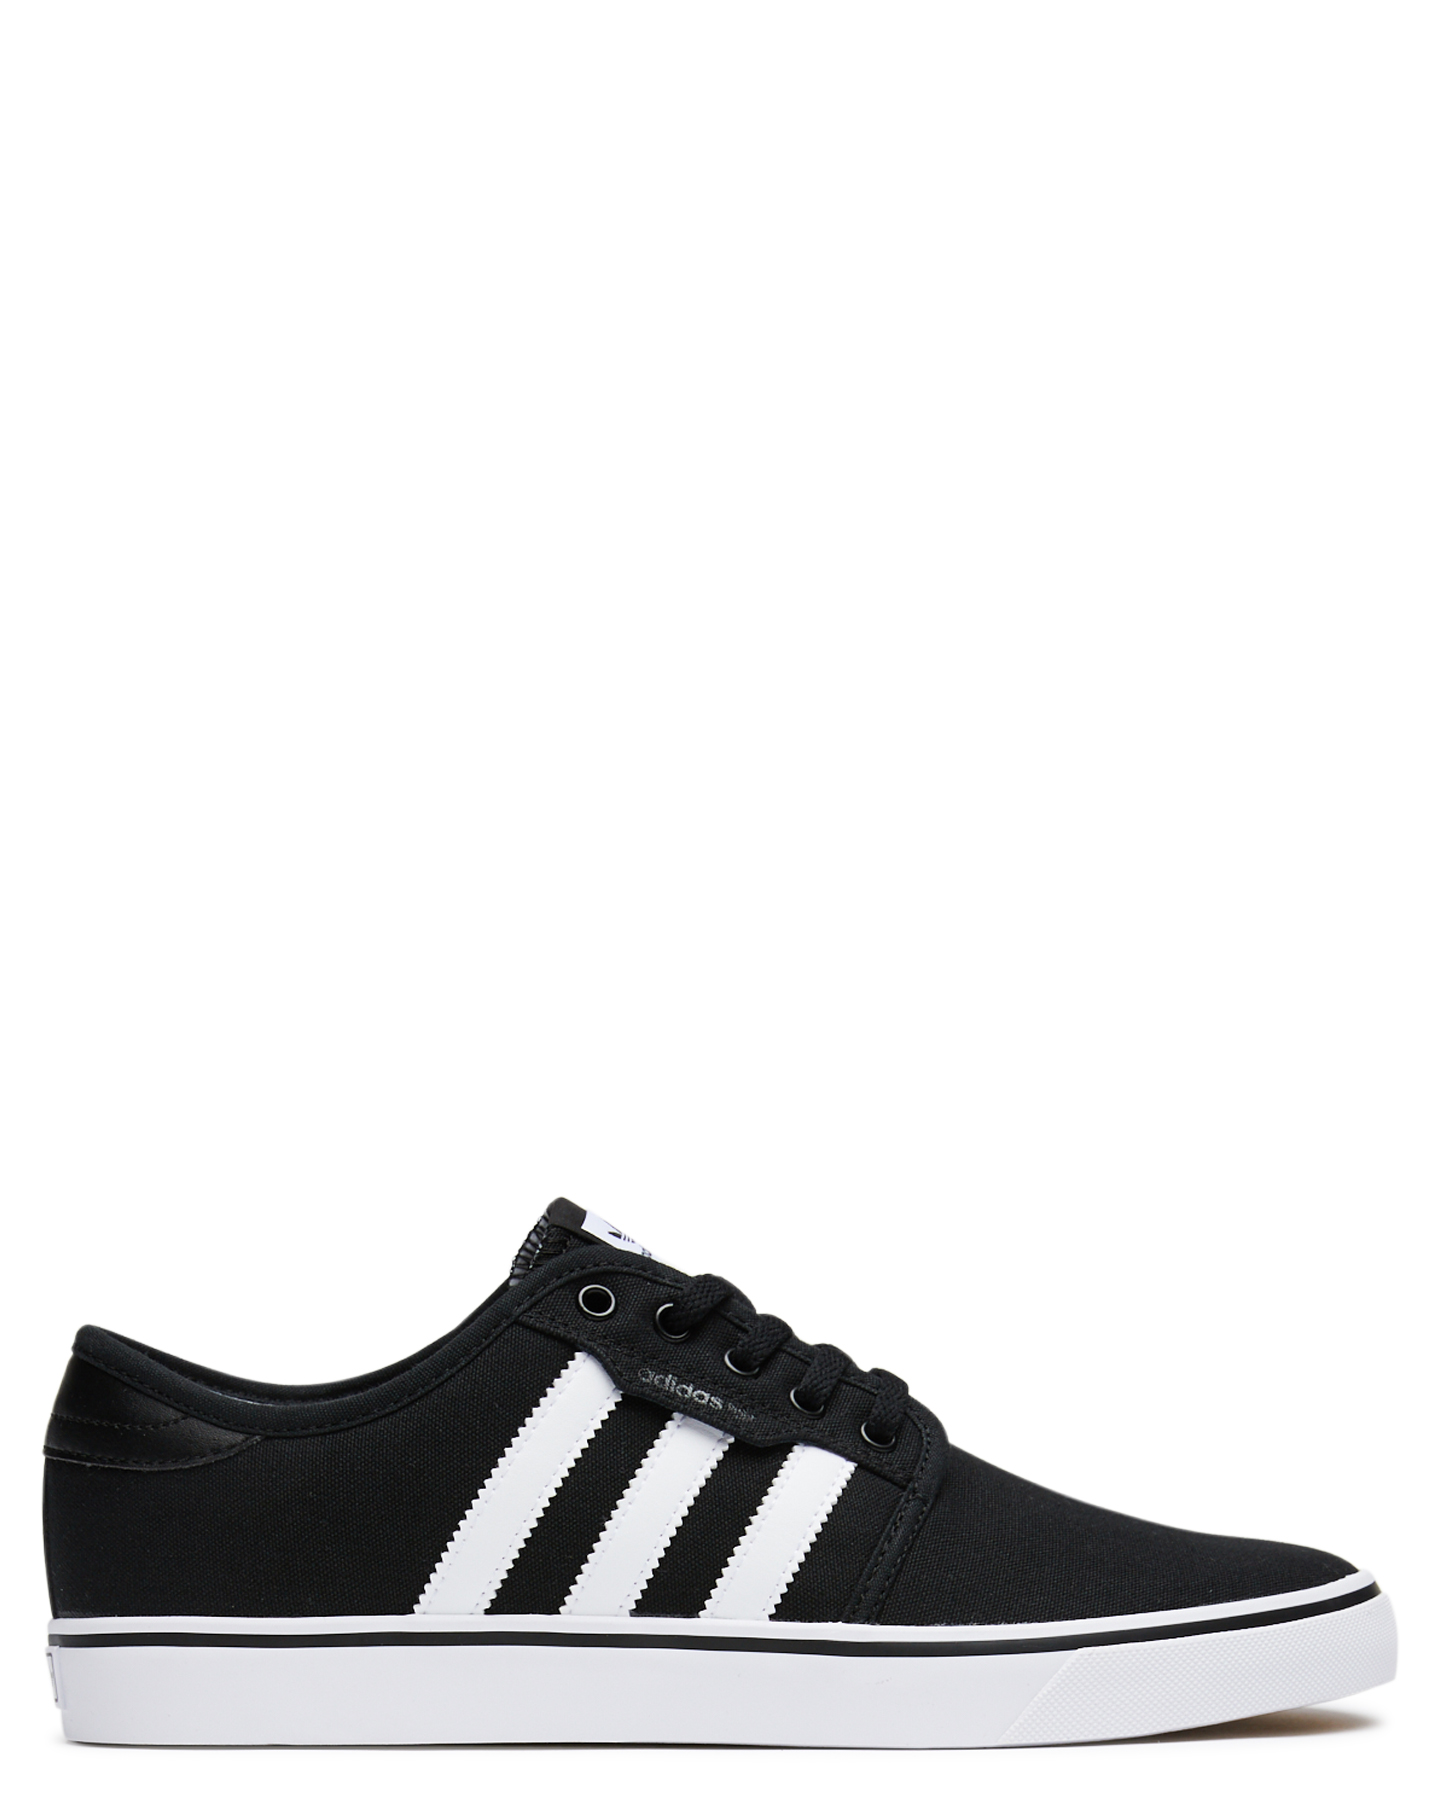 Adidas Womens Seeley Shoe - Black White 